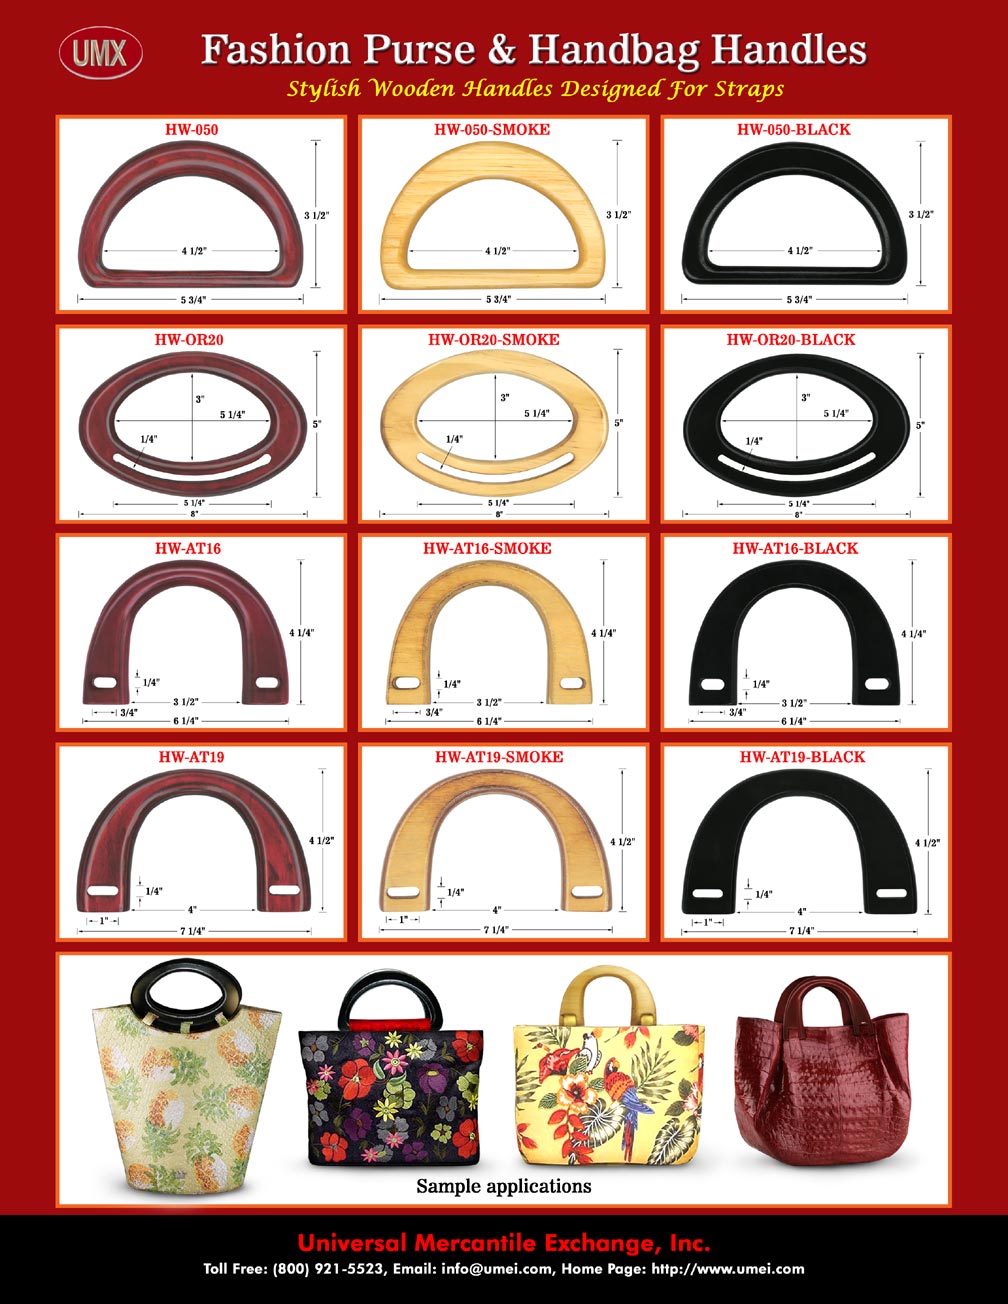 UMX Catalogues - Stylish Fashion Purse and Handbag Hardware - Wooden Handles